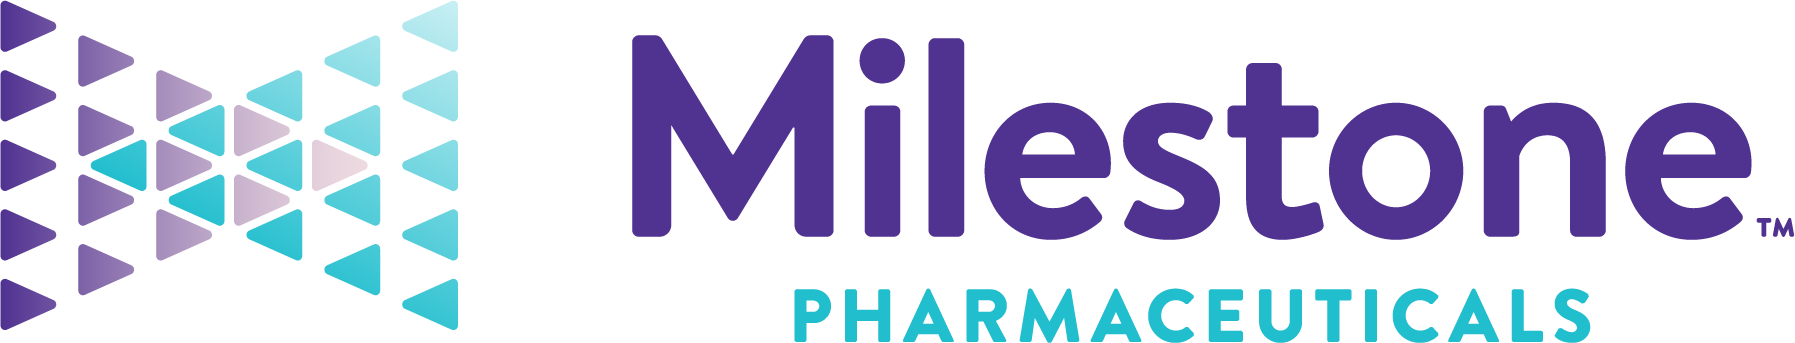 Milestone Pharmaseuticals logo